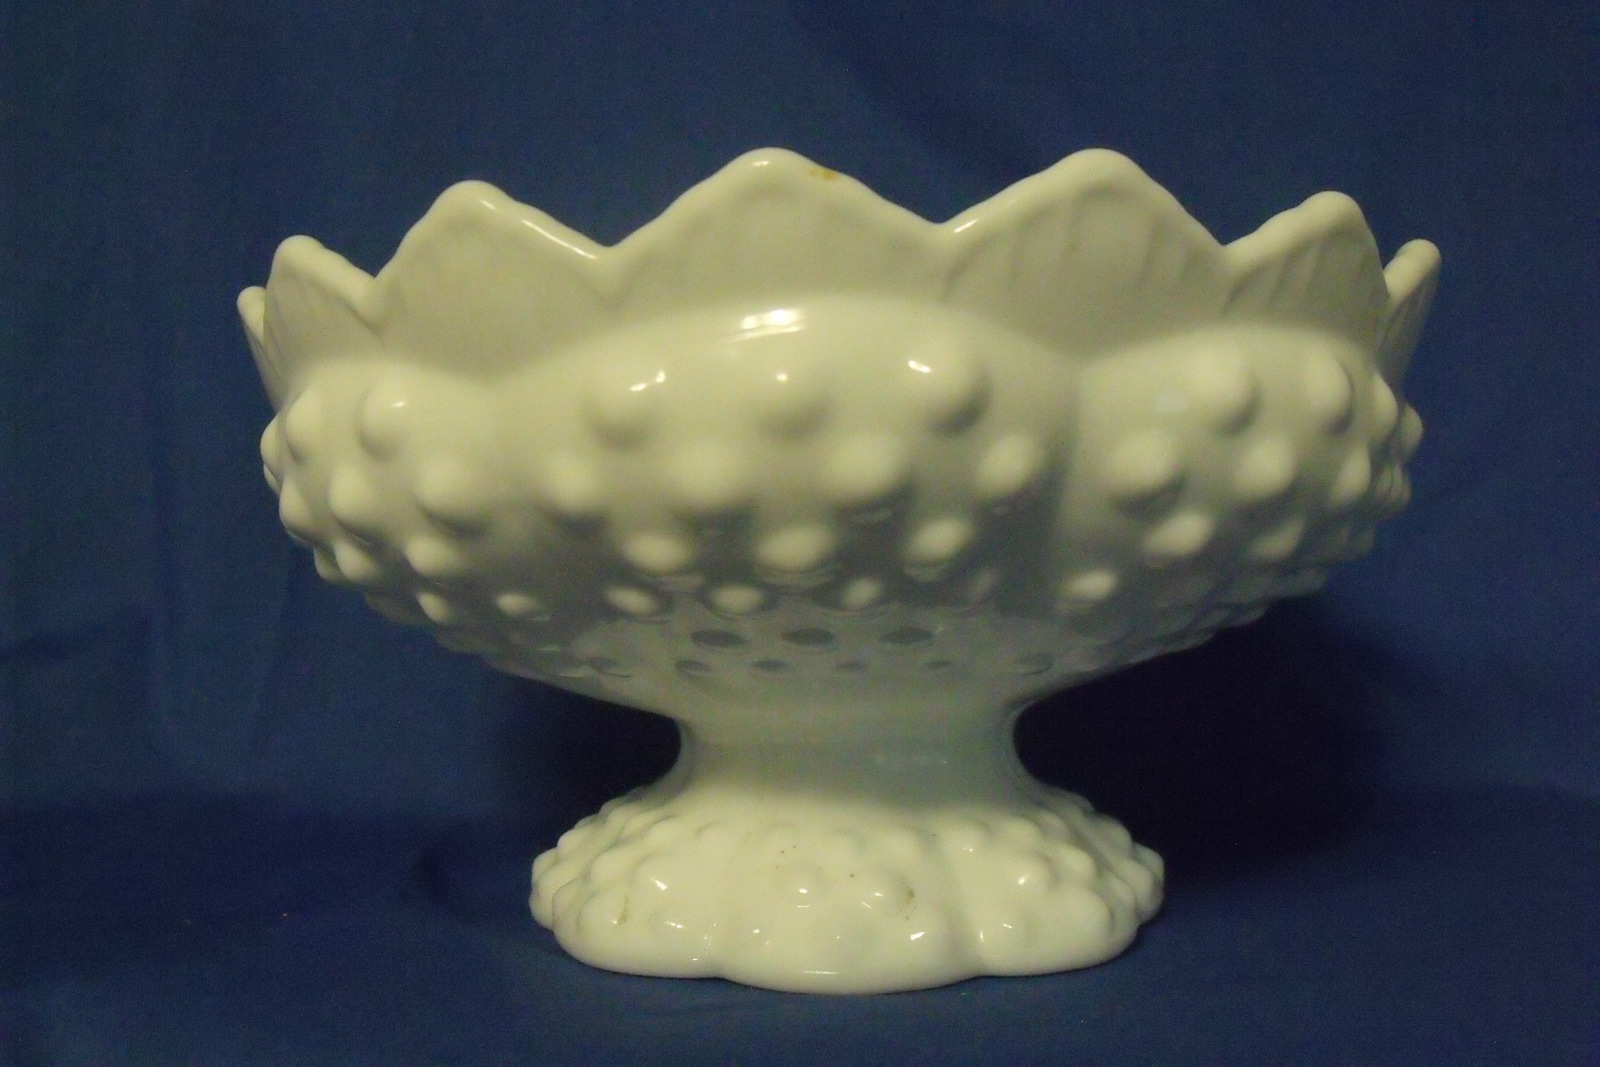 White Milk Glass Hobnail Decorative Centerpiece Candle Holder Bowl - $24.95